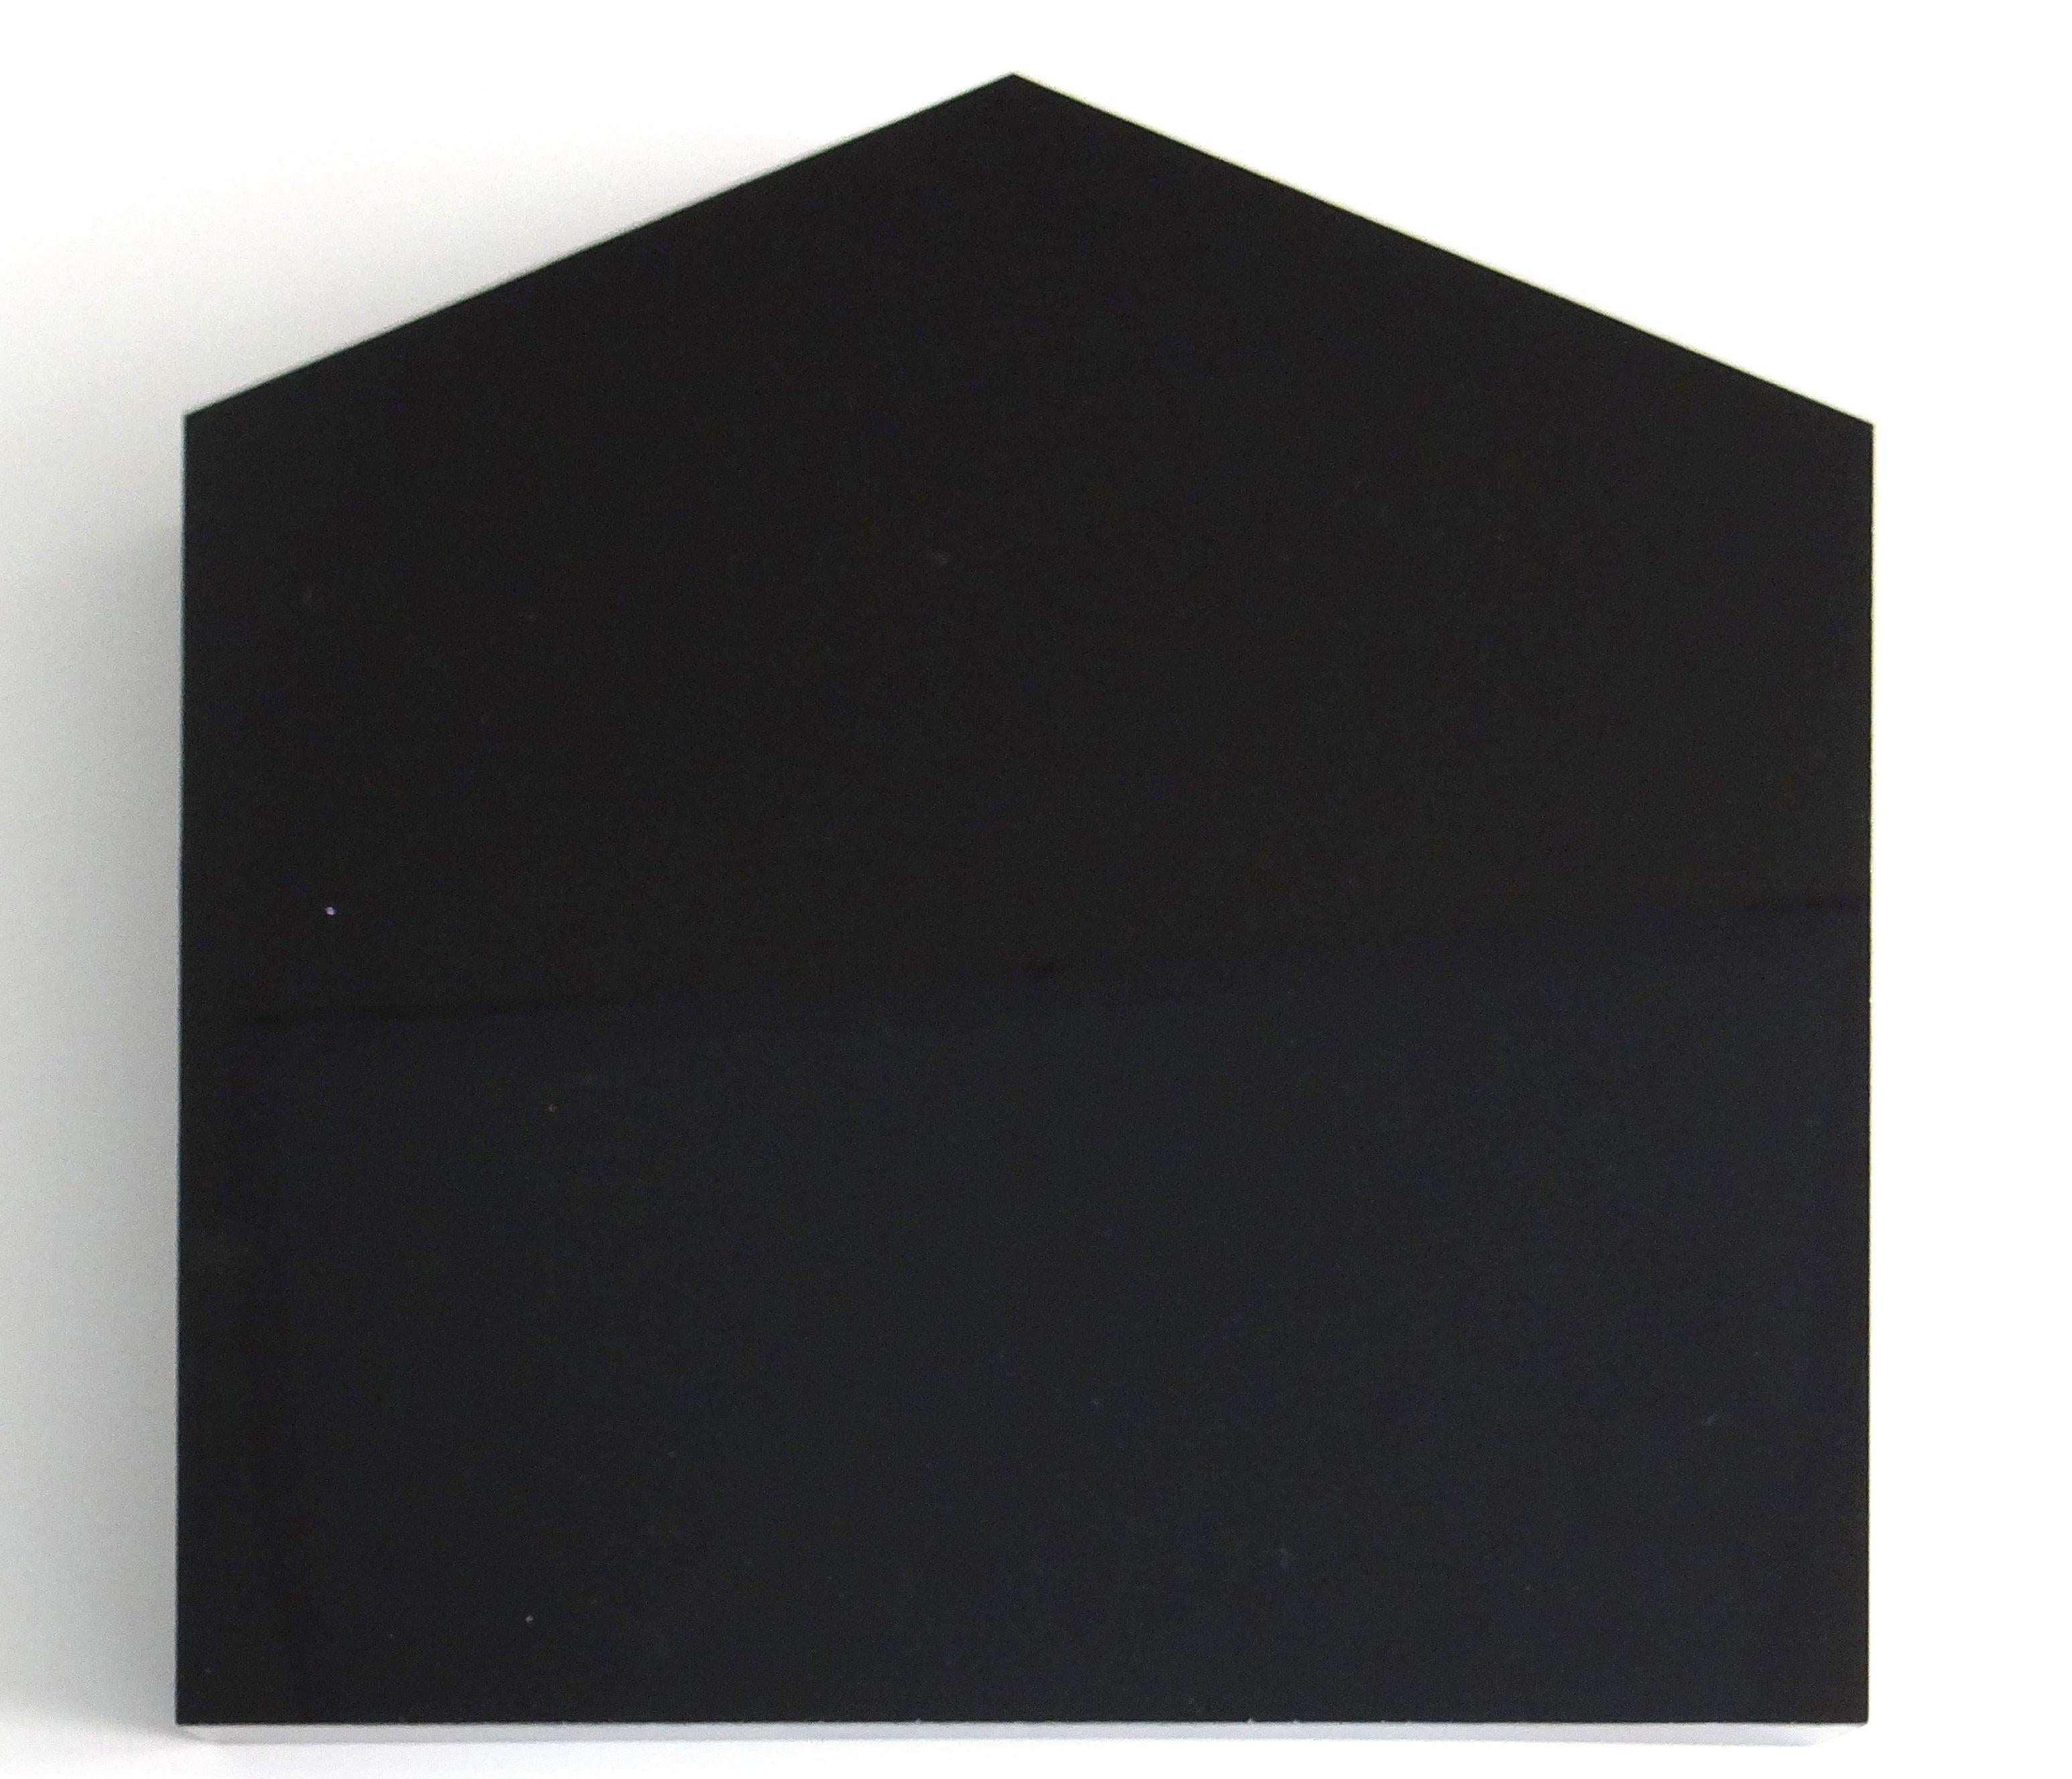 Epitafios, One of a Kind Plexiglass Wall Sculpture - Black Abstract Sculpture by Alejandro Valencia